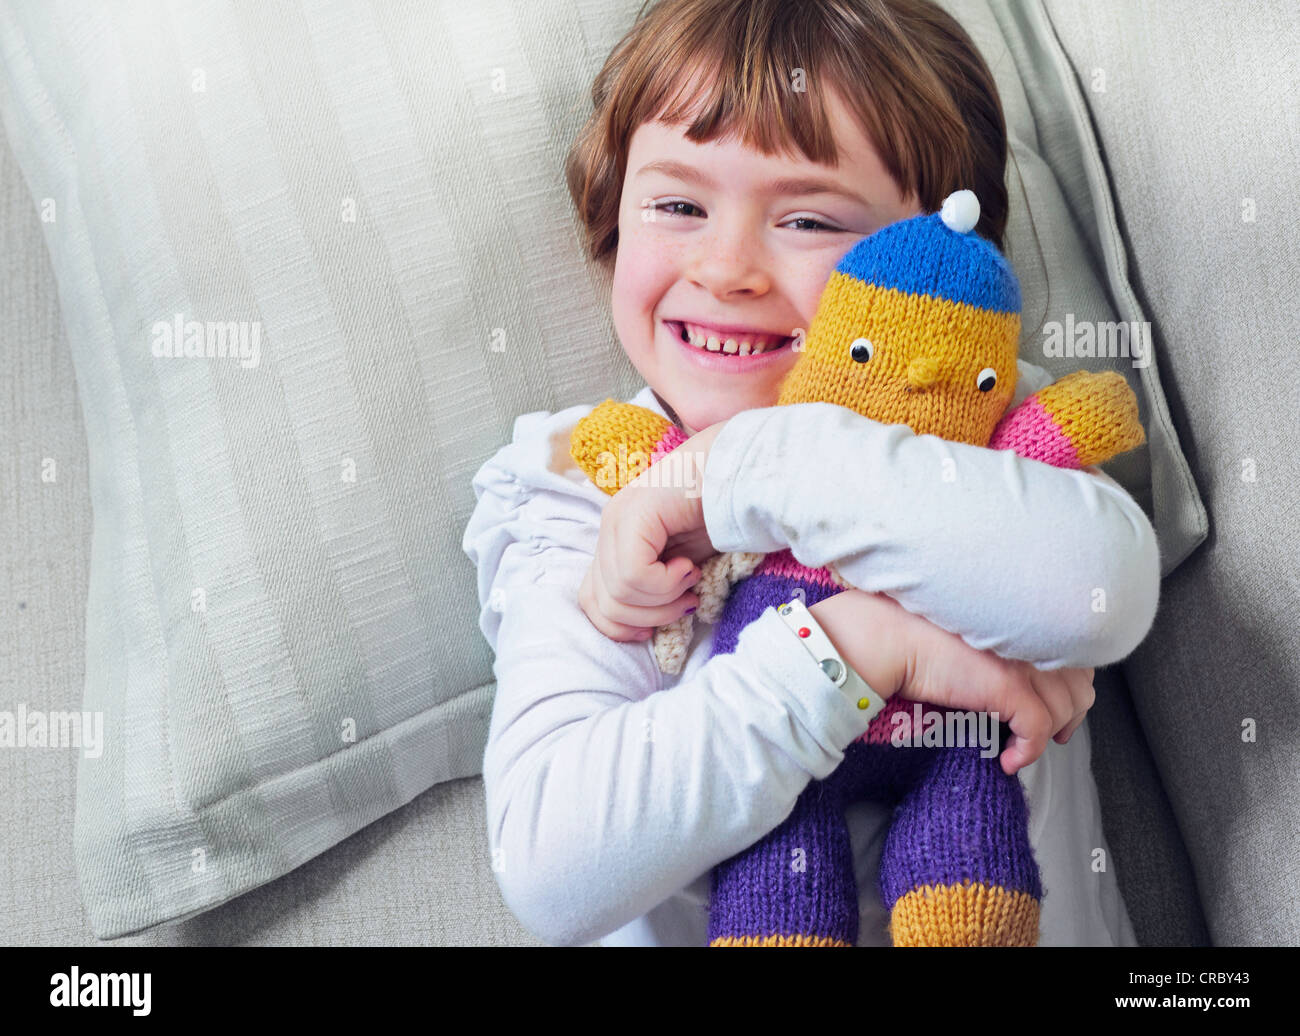 Girl hugging stuffed animal sur canapé Banque D'Images